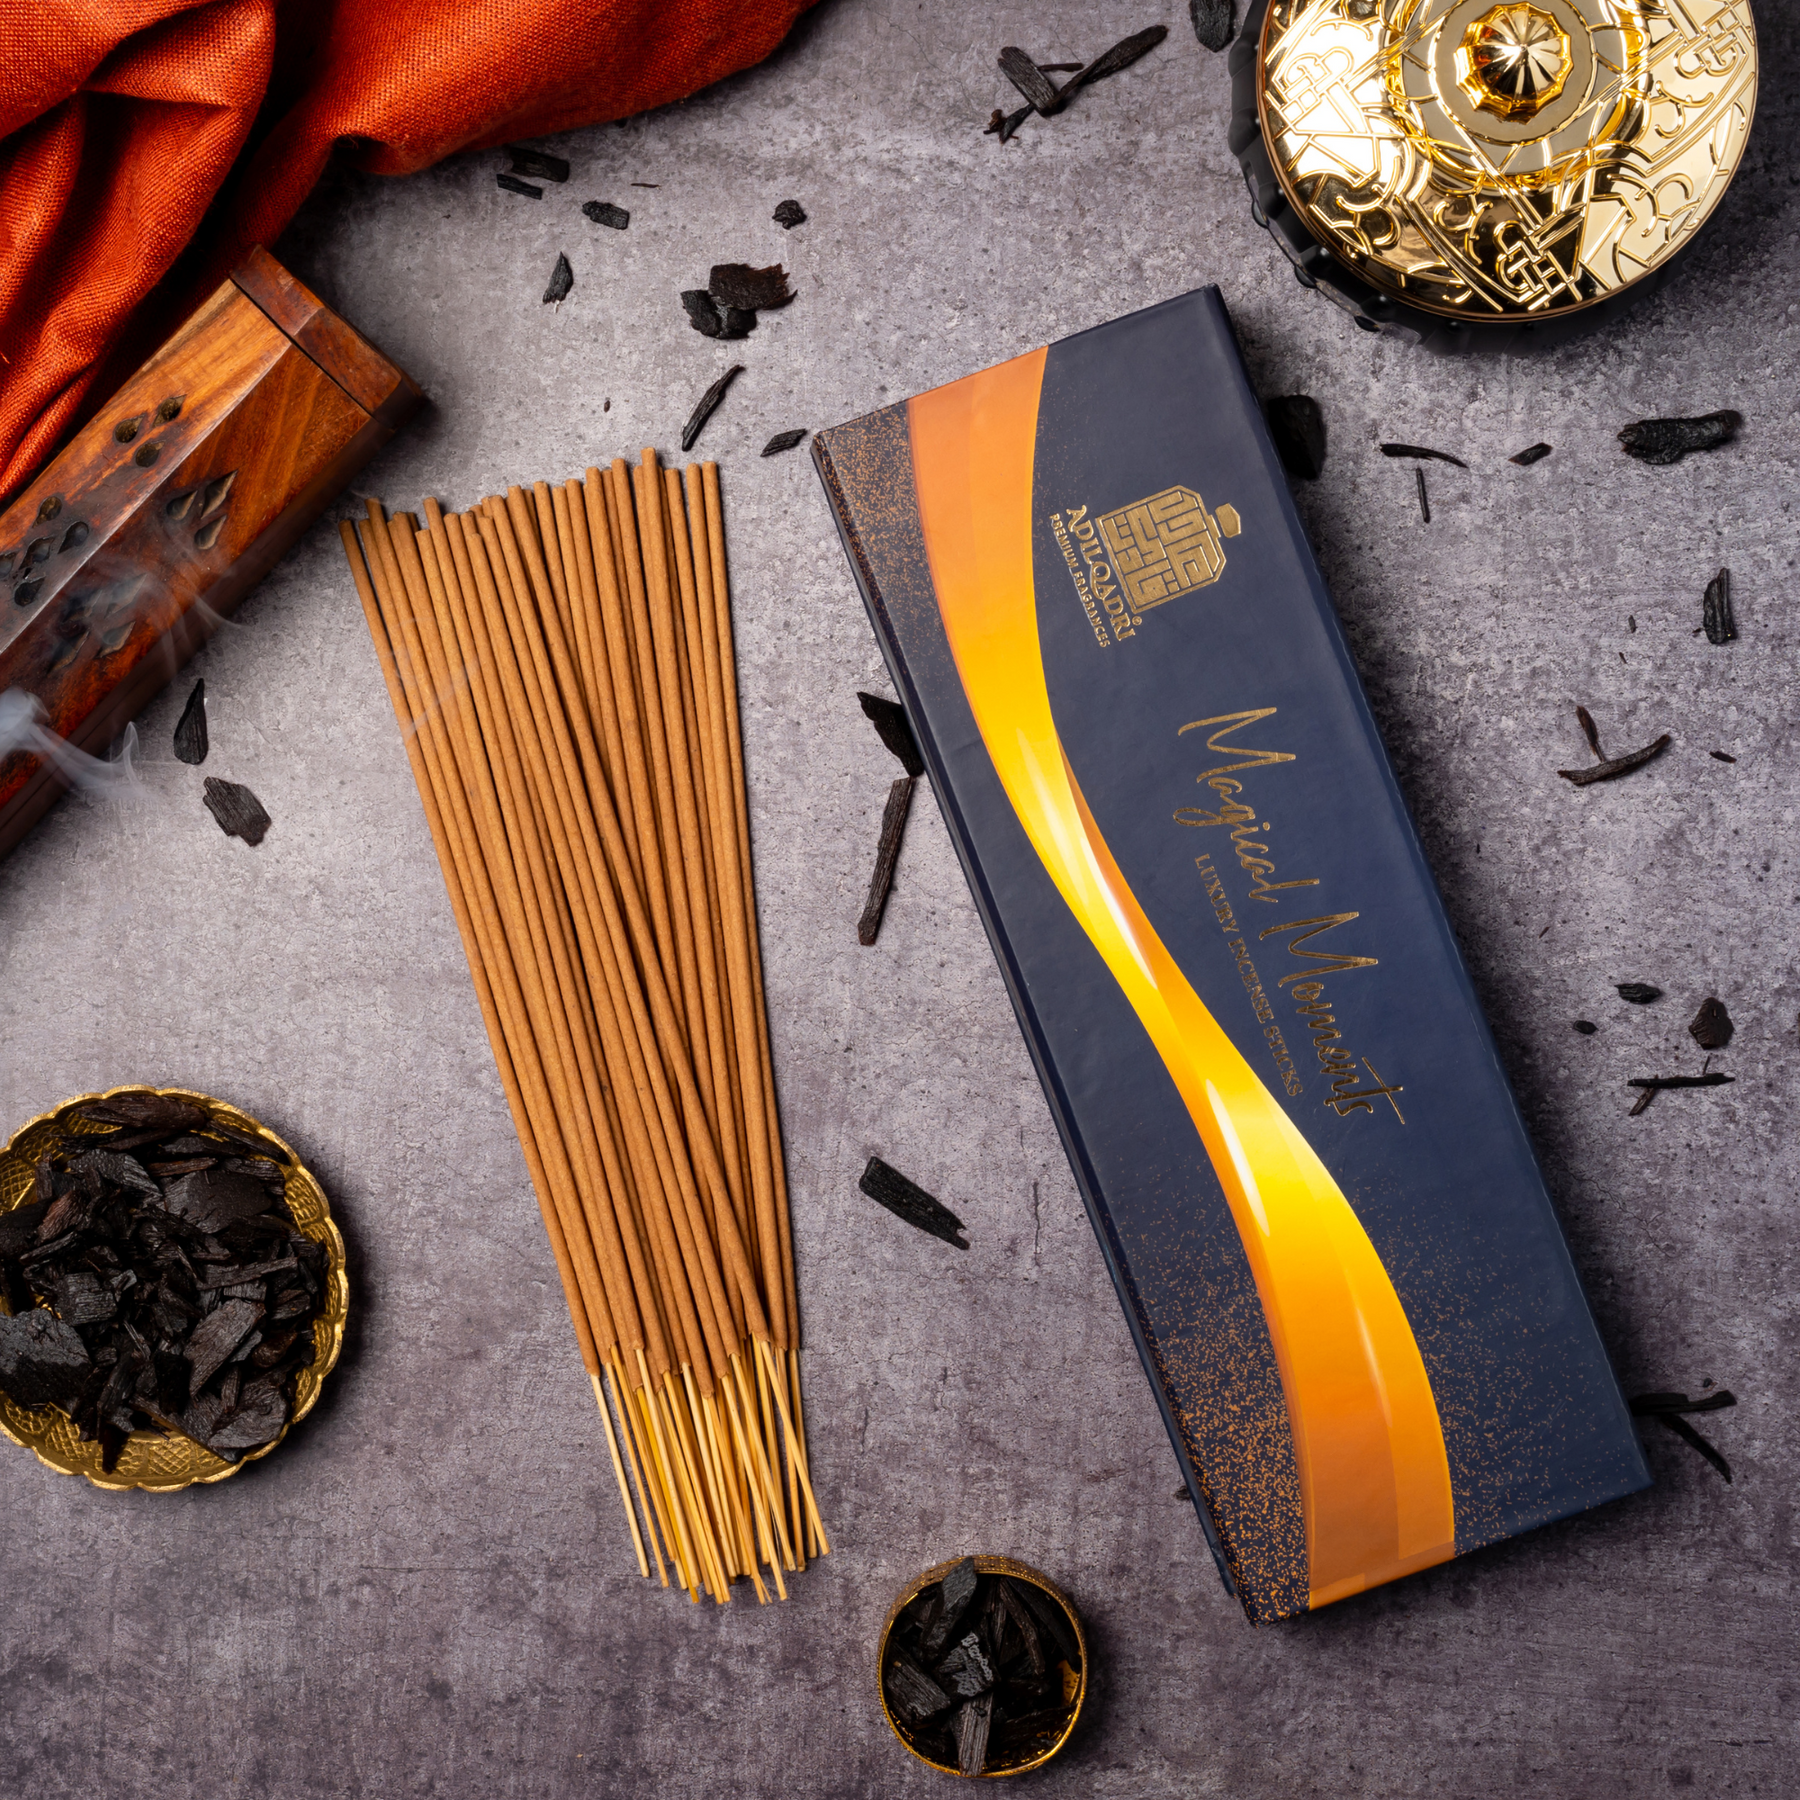 Adilqadri Magical Moments Premium Quality Agarbatti ( Incense Stick ) 100 gms